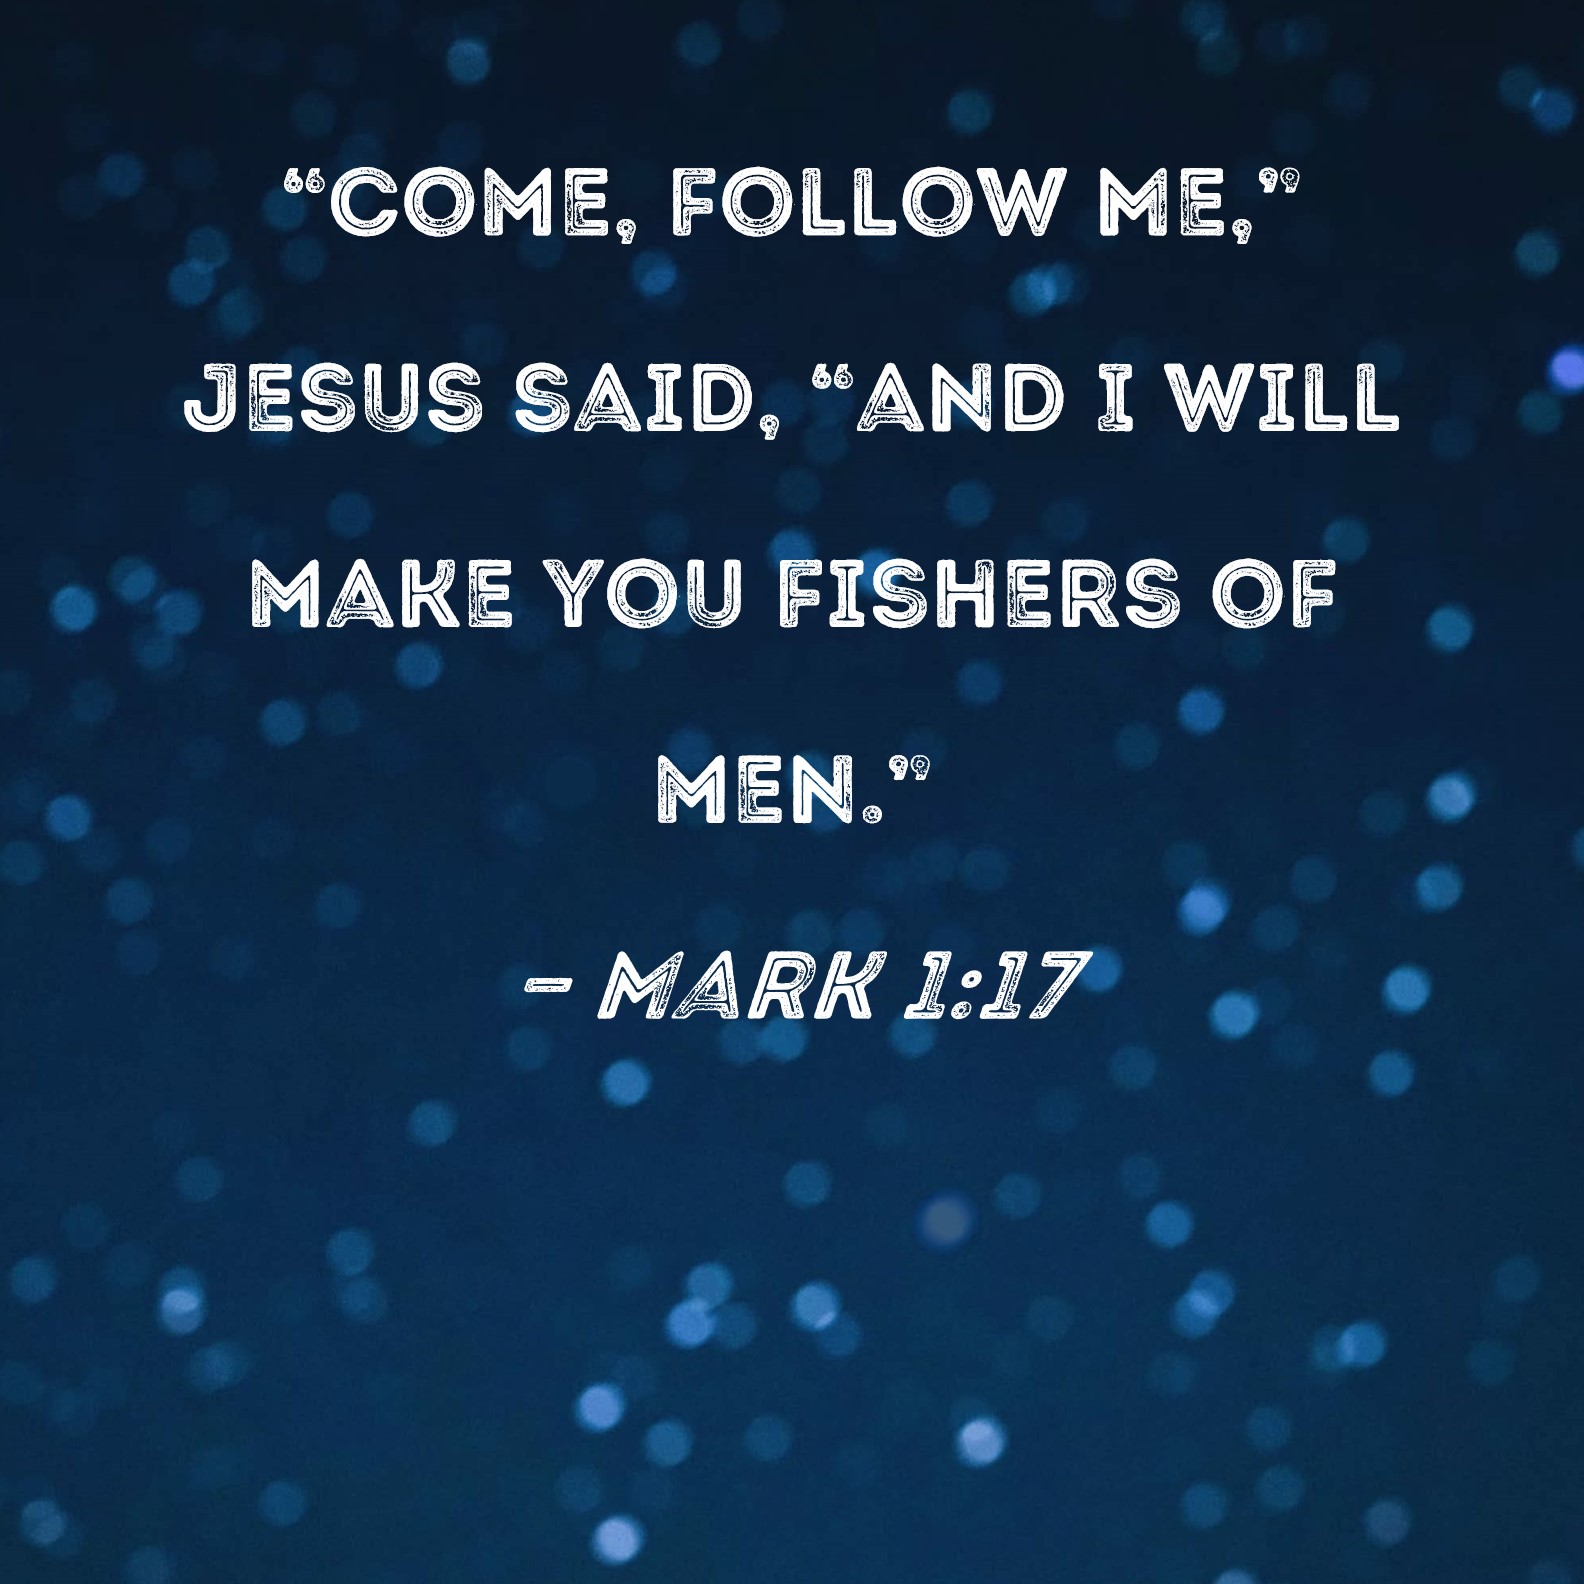 Mark 117 follow Me," Jesus said, "and I will make you fishers